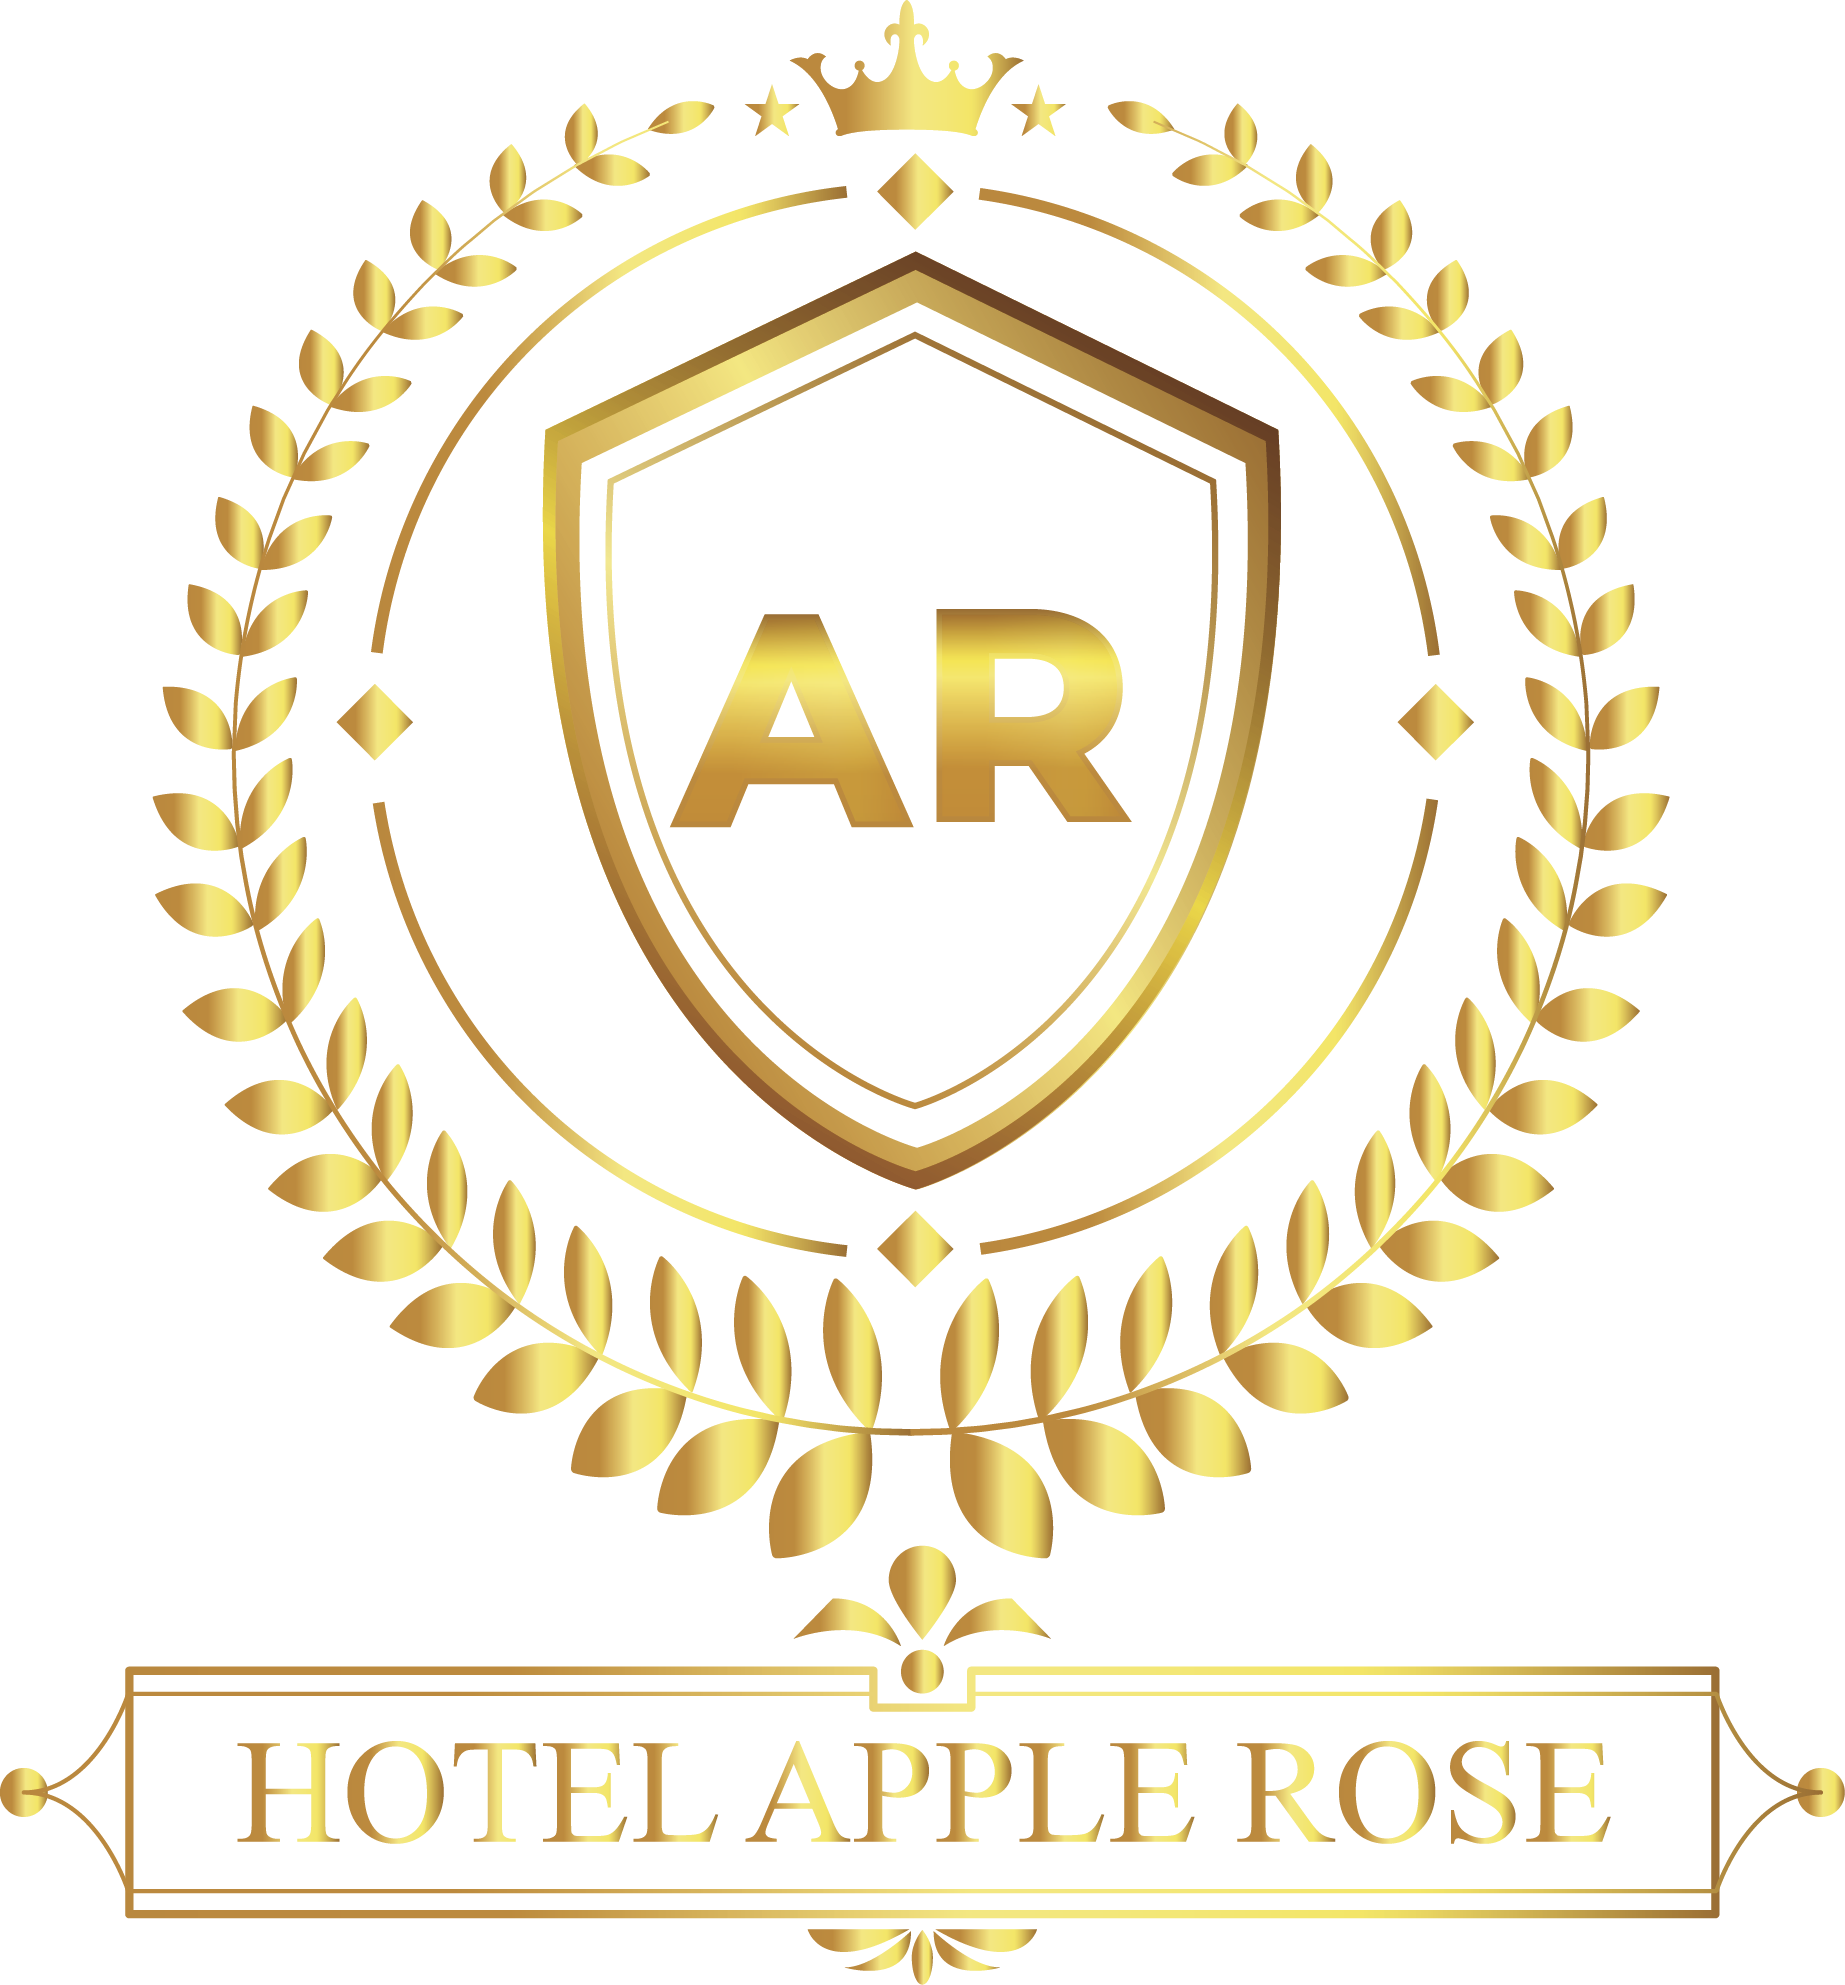 Hotel Apple Rose|Hotel|Accomodation